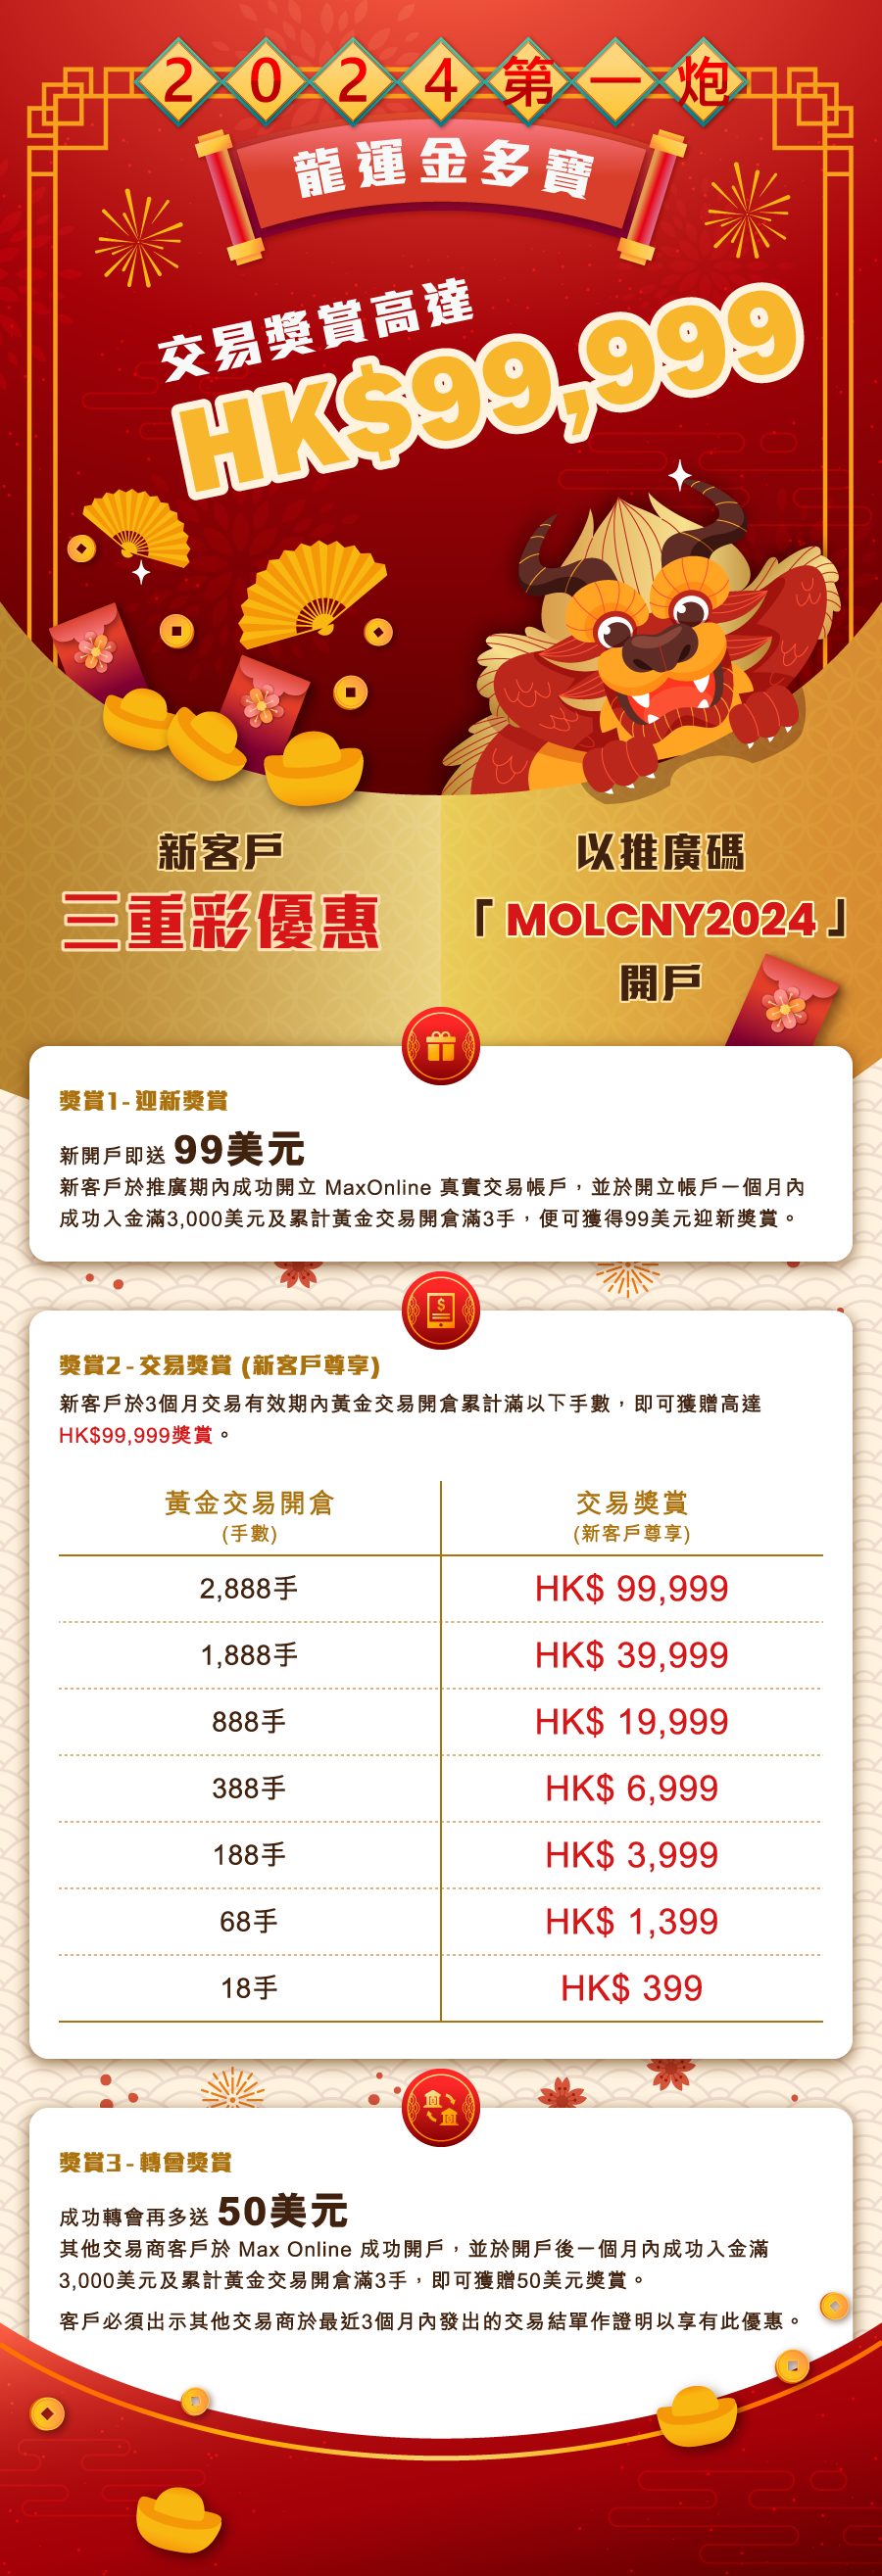 CNY2024_Promotion_New-Client-TC